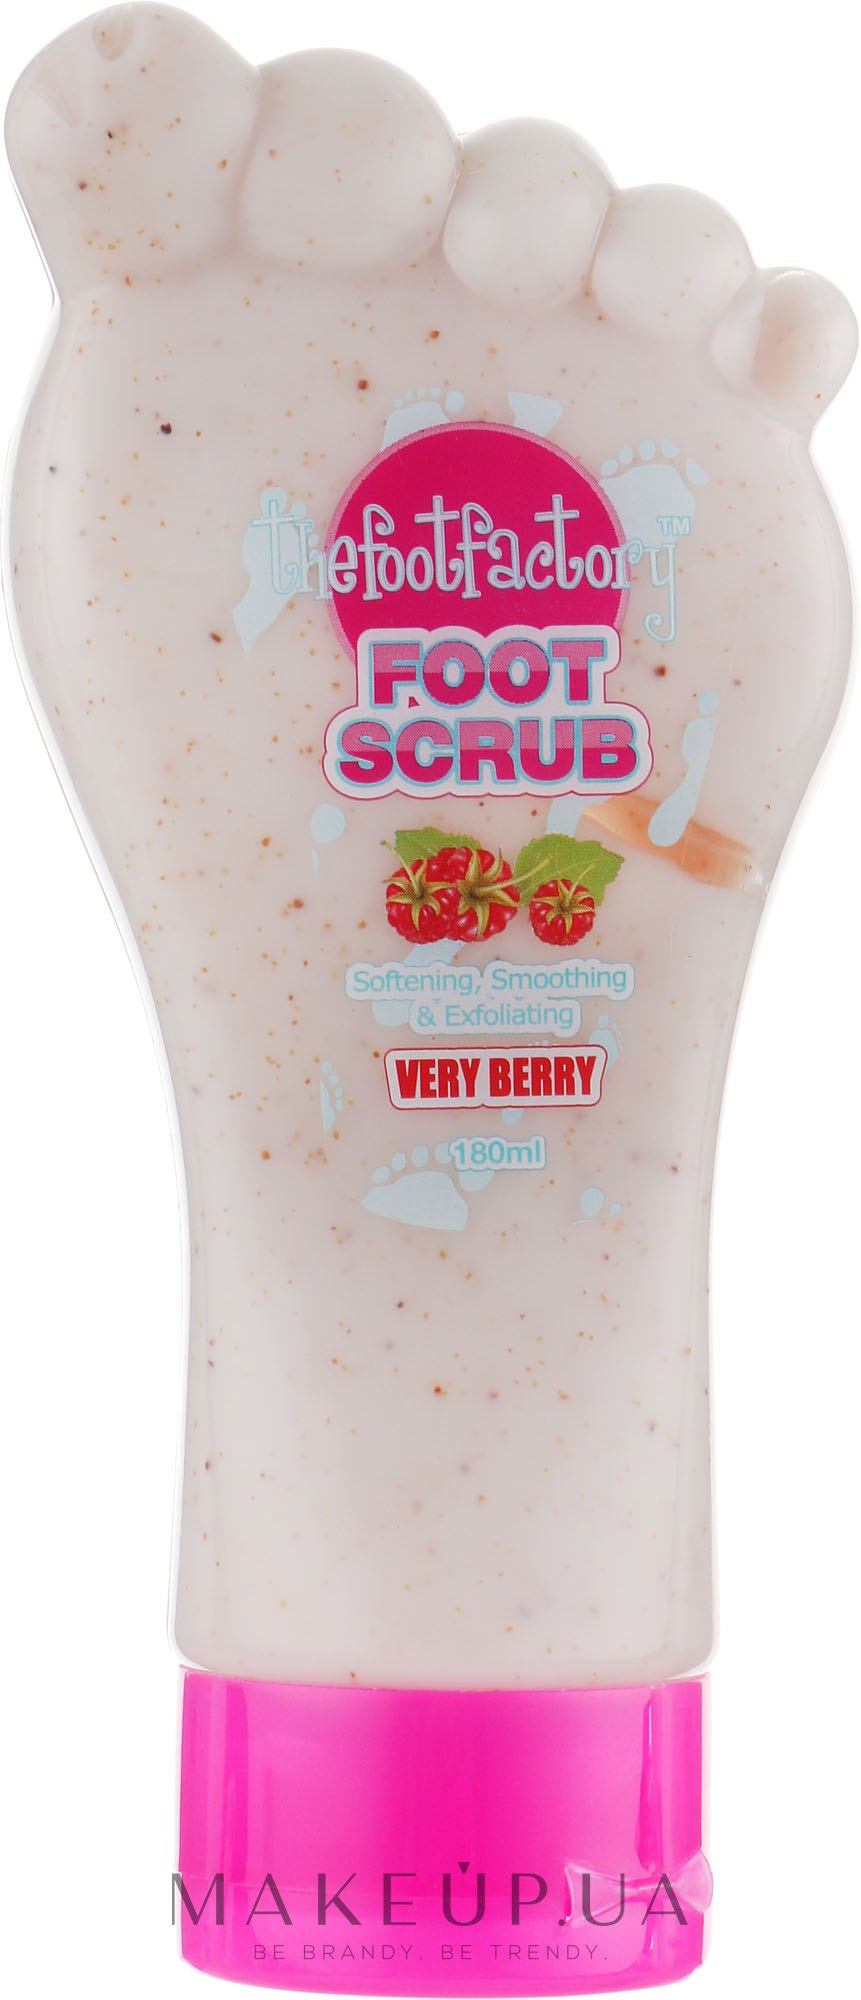 Скраб для ніг - The Foot Factory "Very Berry" Foot Scrub — фото 180ml